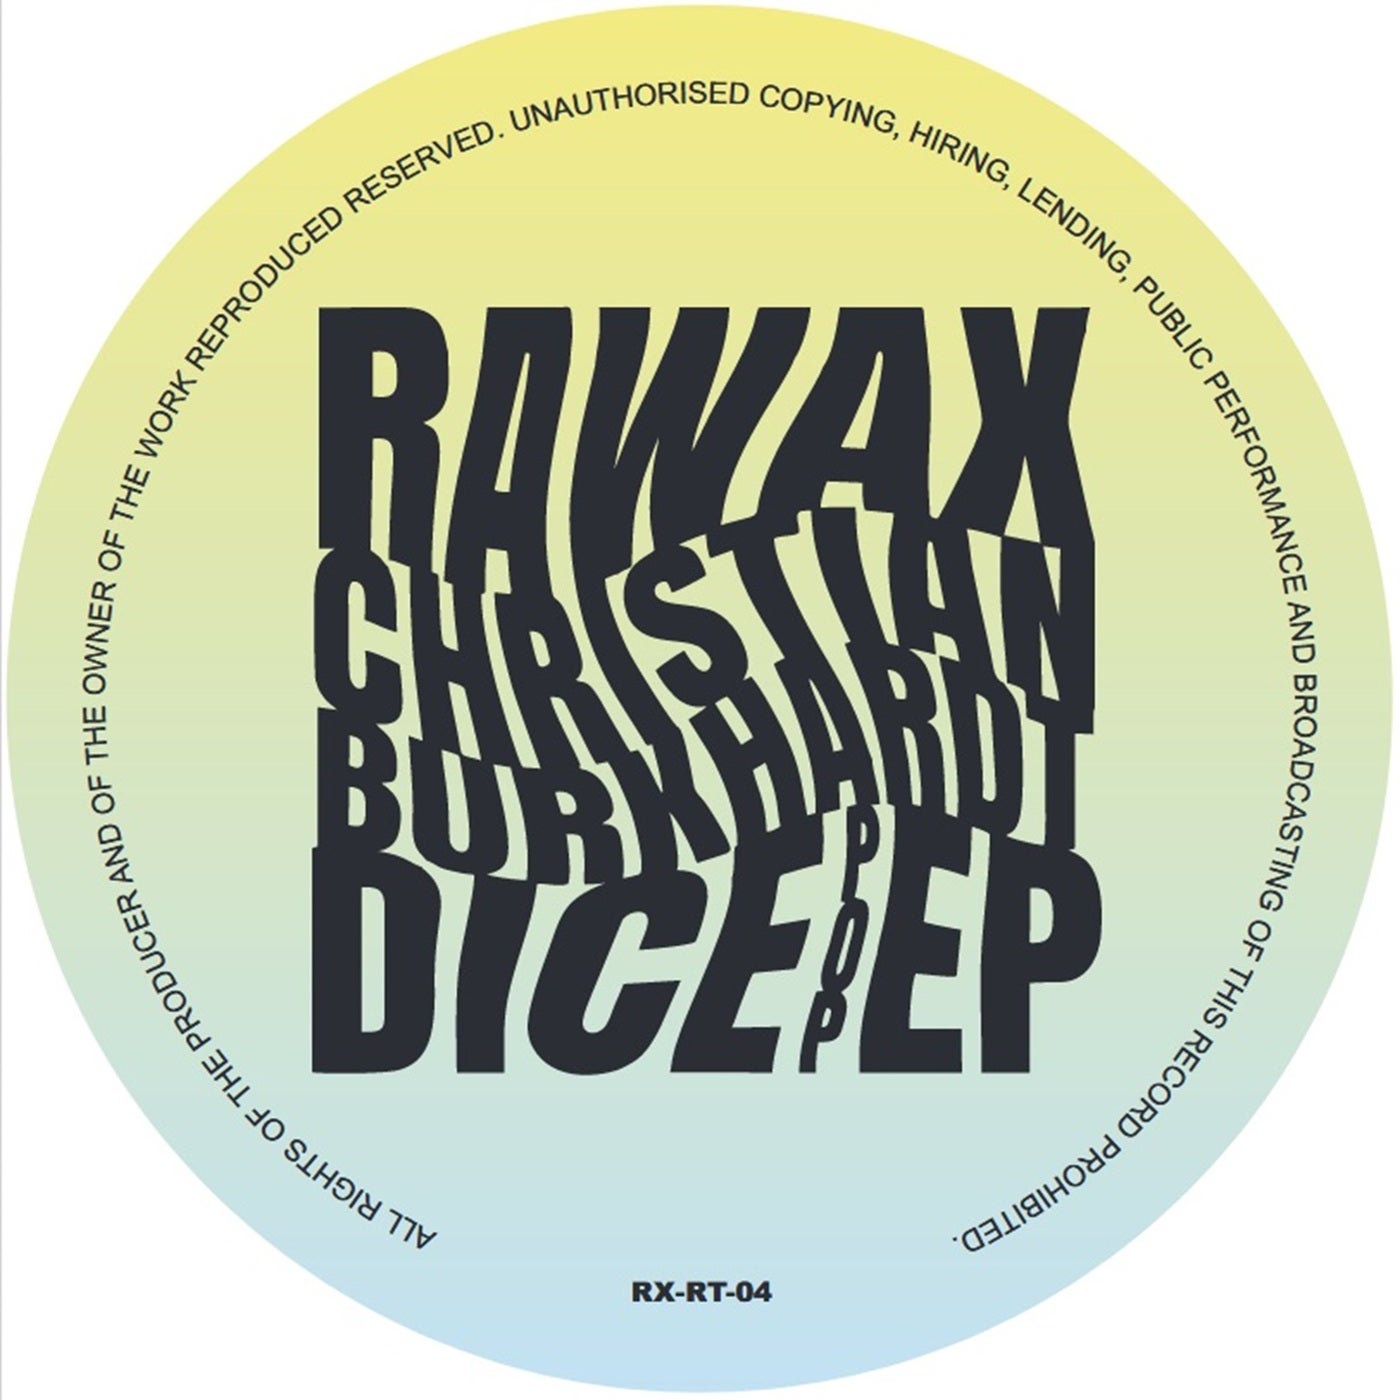 image cover: Christian Burkhardt - Dice Pop EP on Rawax